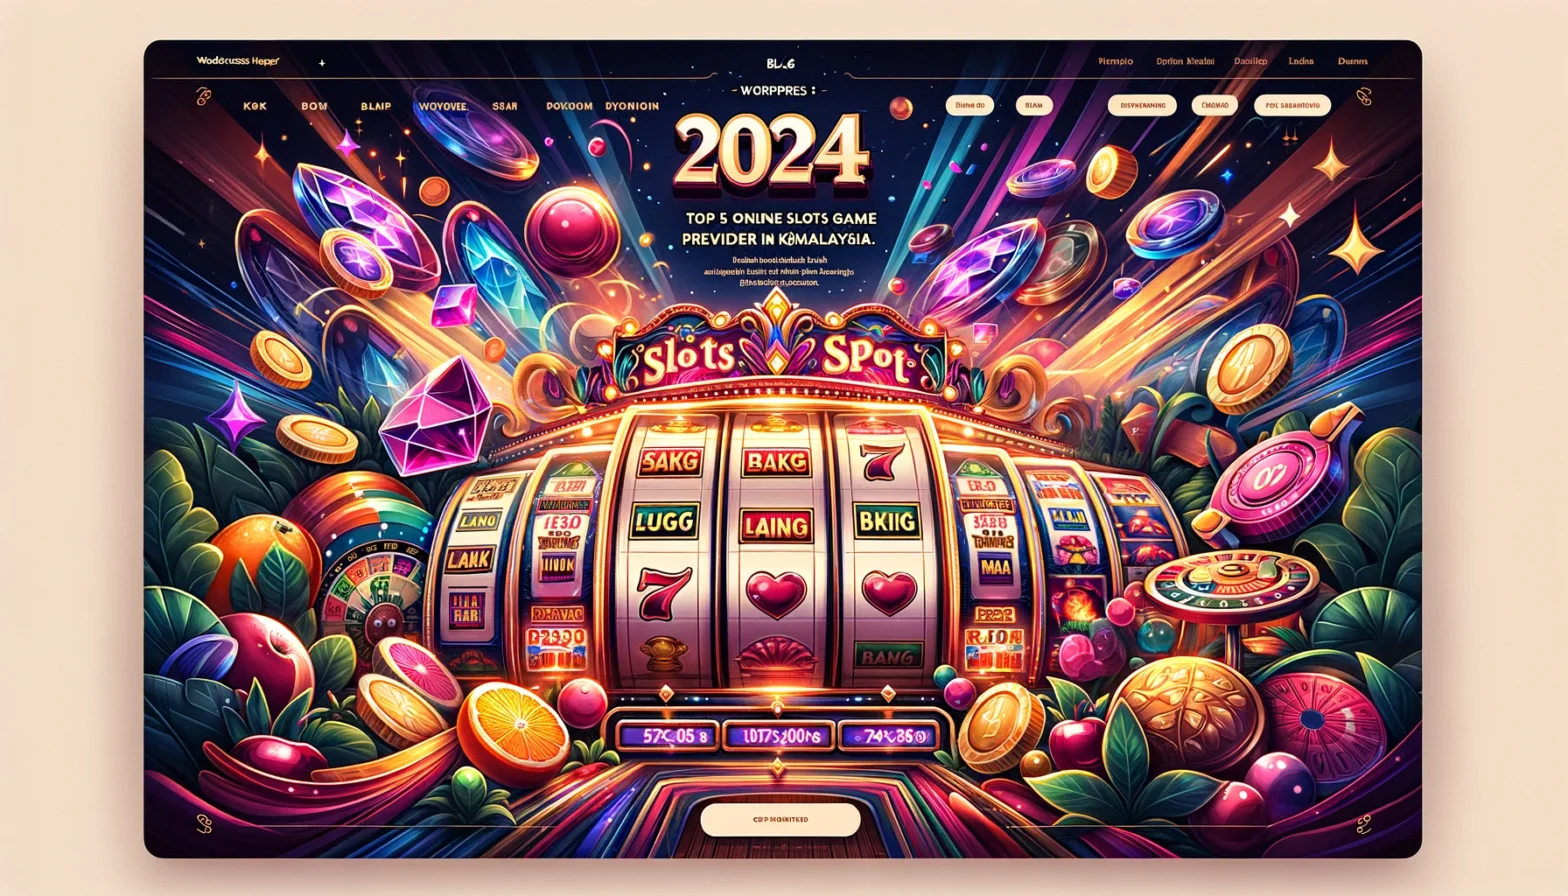 2024 Top 5 Online Slots Game Providers